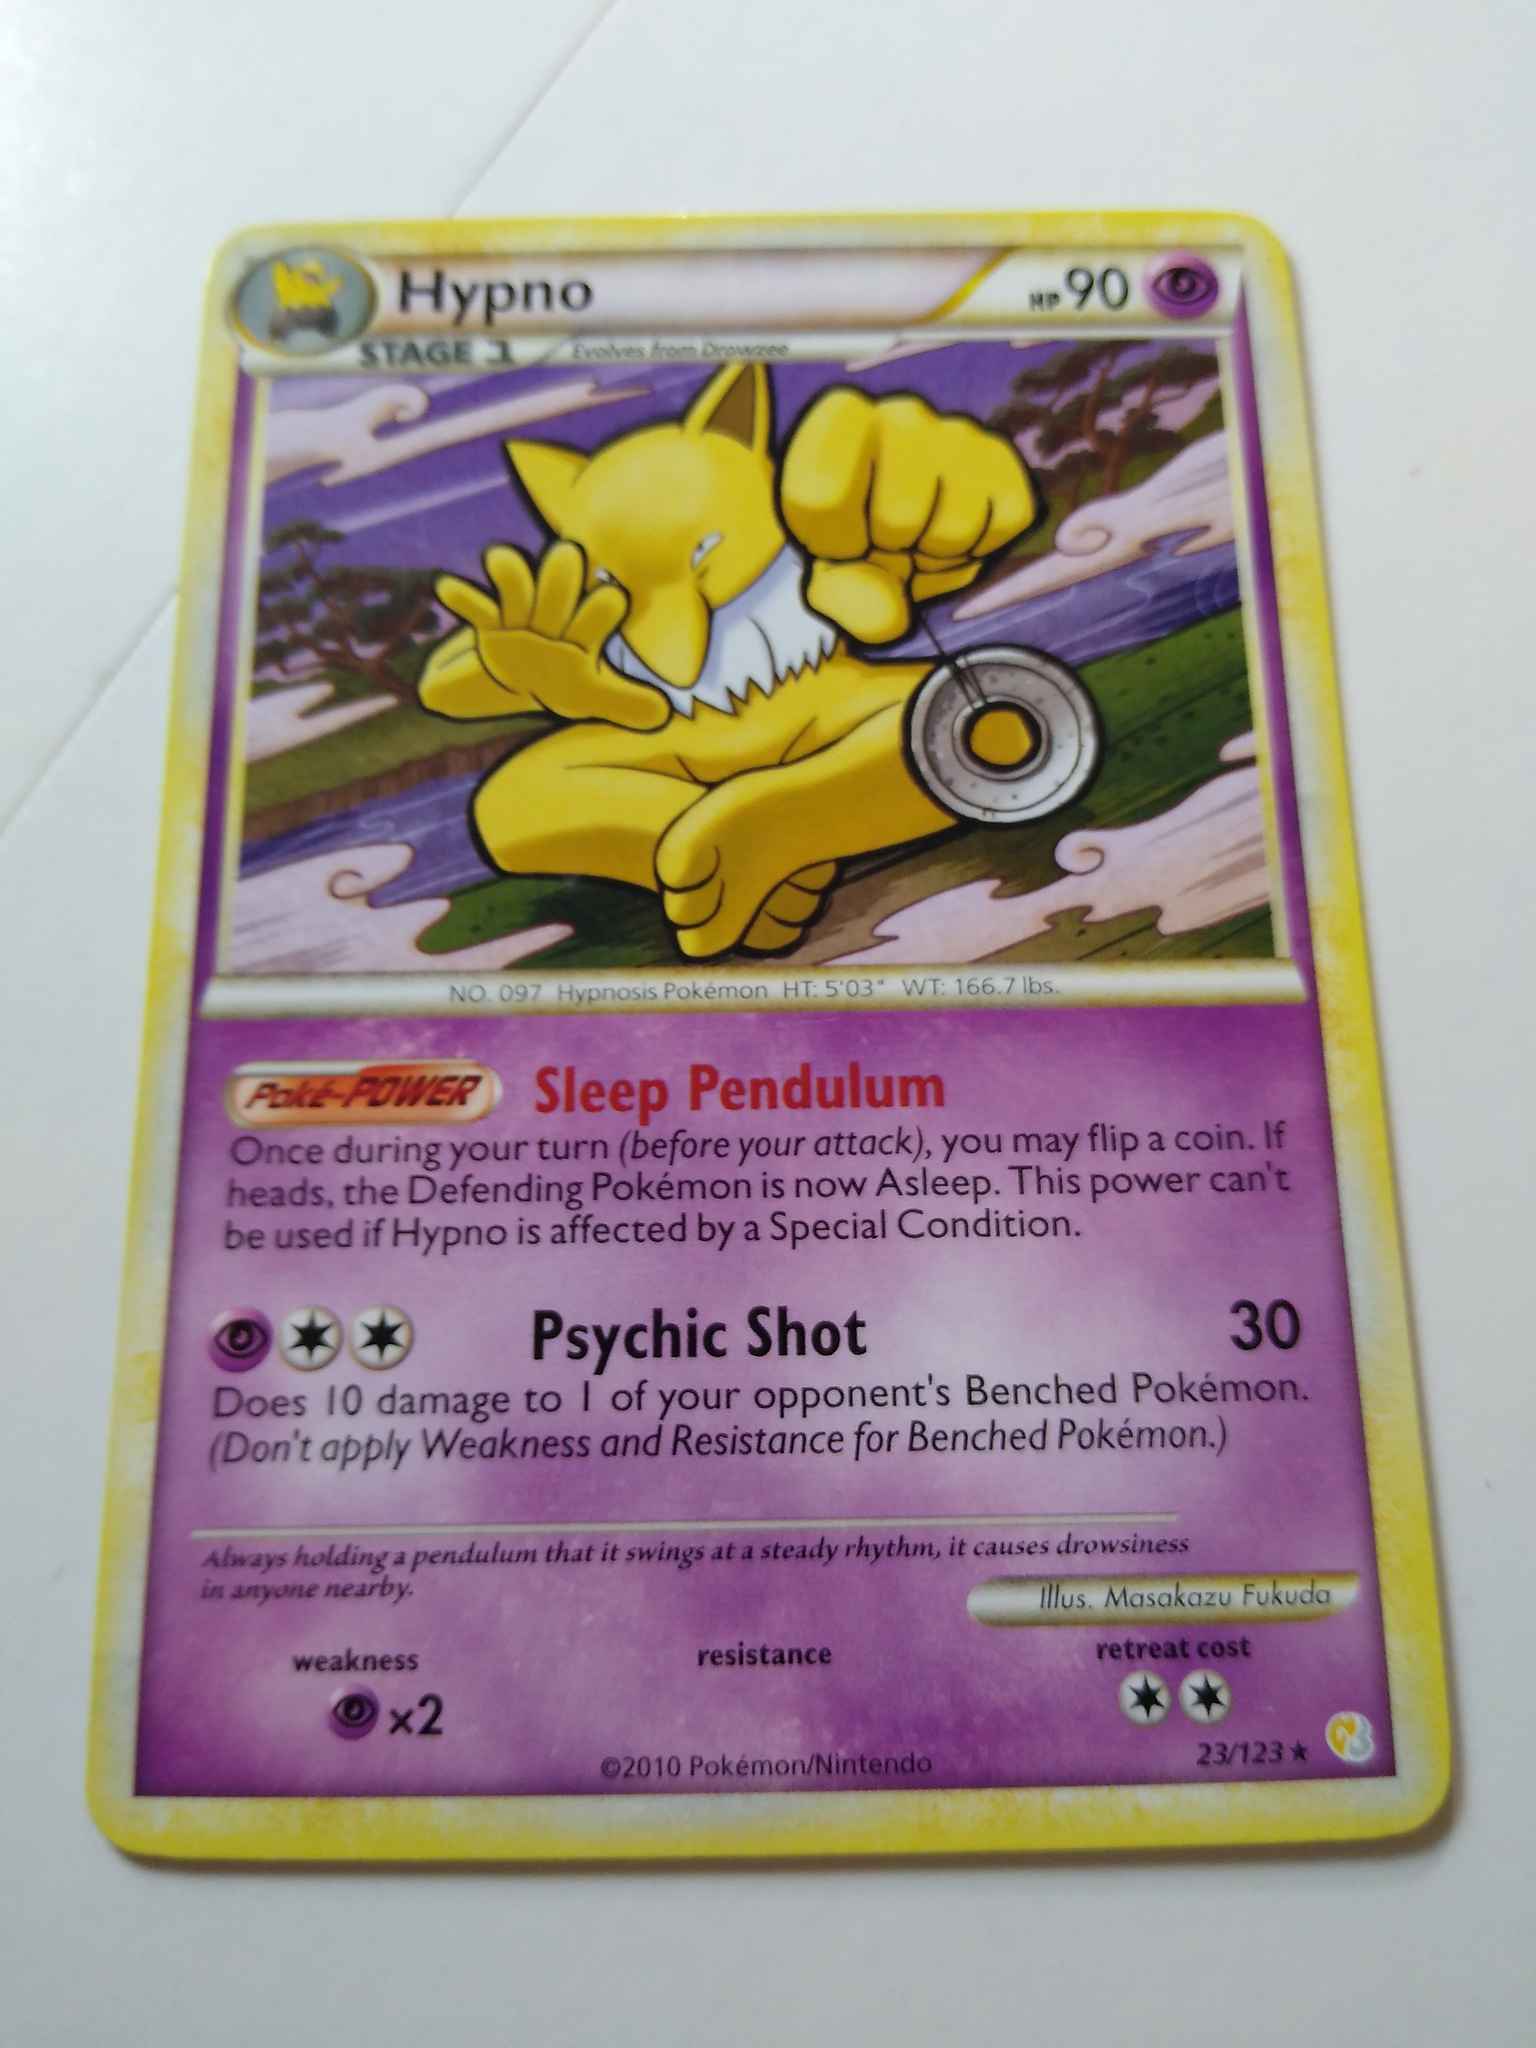 Hypno DIGITAL ptcgo in Game Card - Pokemon TCG Online Sleep Pendulum HGSS 